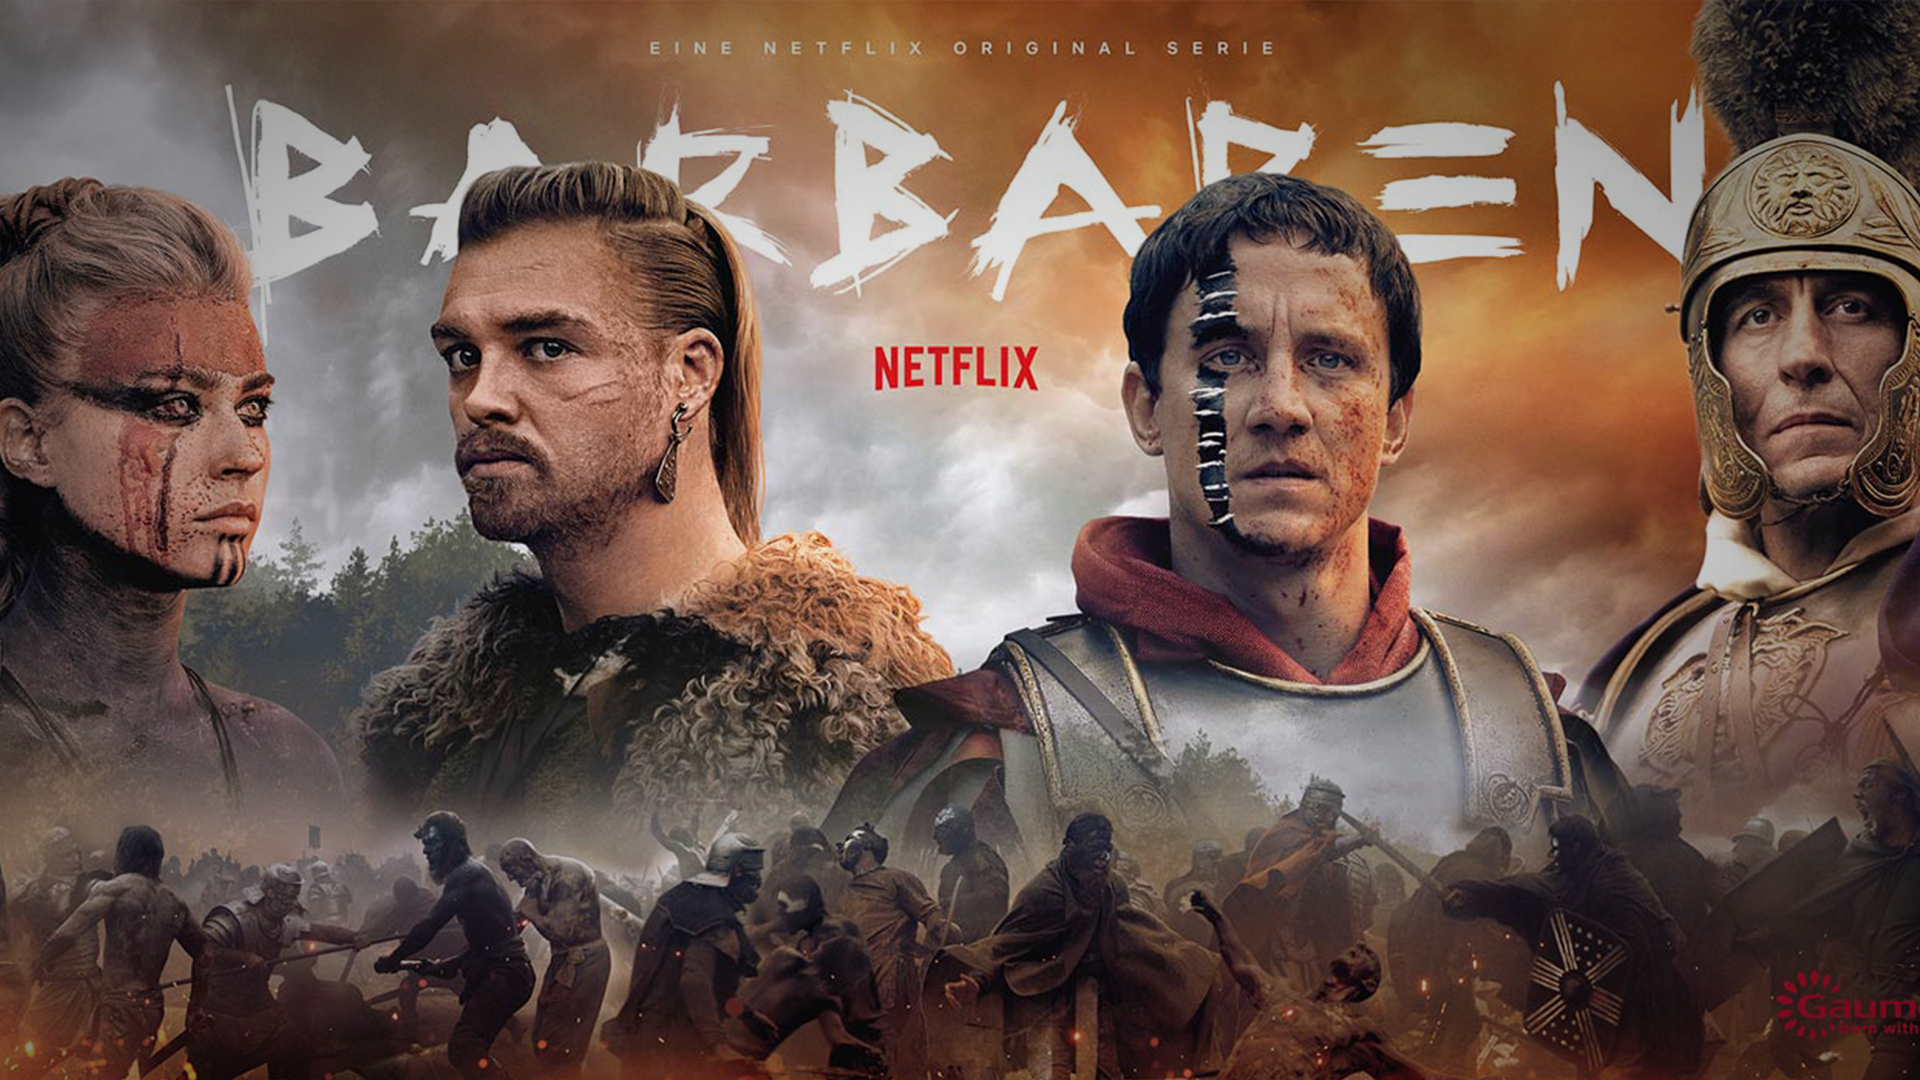 Netflix Barbarians Wallpapers